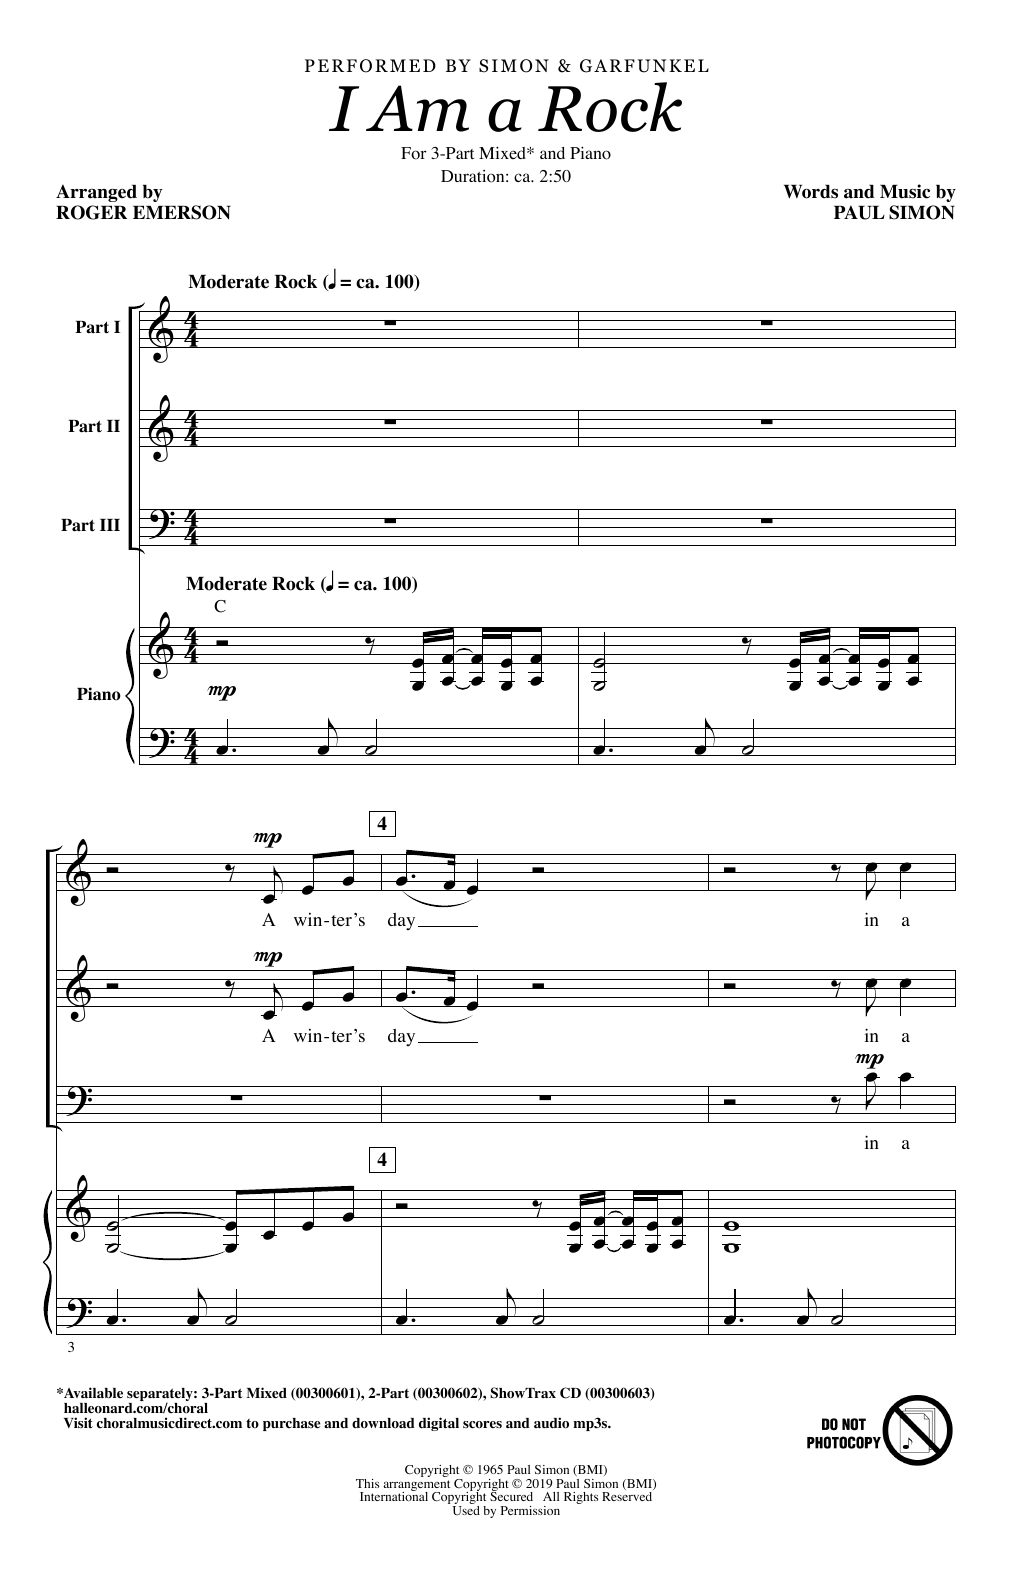 Simon & Garfunkel I Am A Rock (arr. Roger Emerson) sheet music notes and chords arranged for 3-Part Mixed Choir